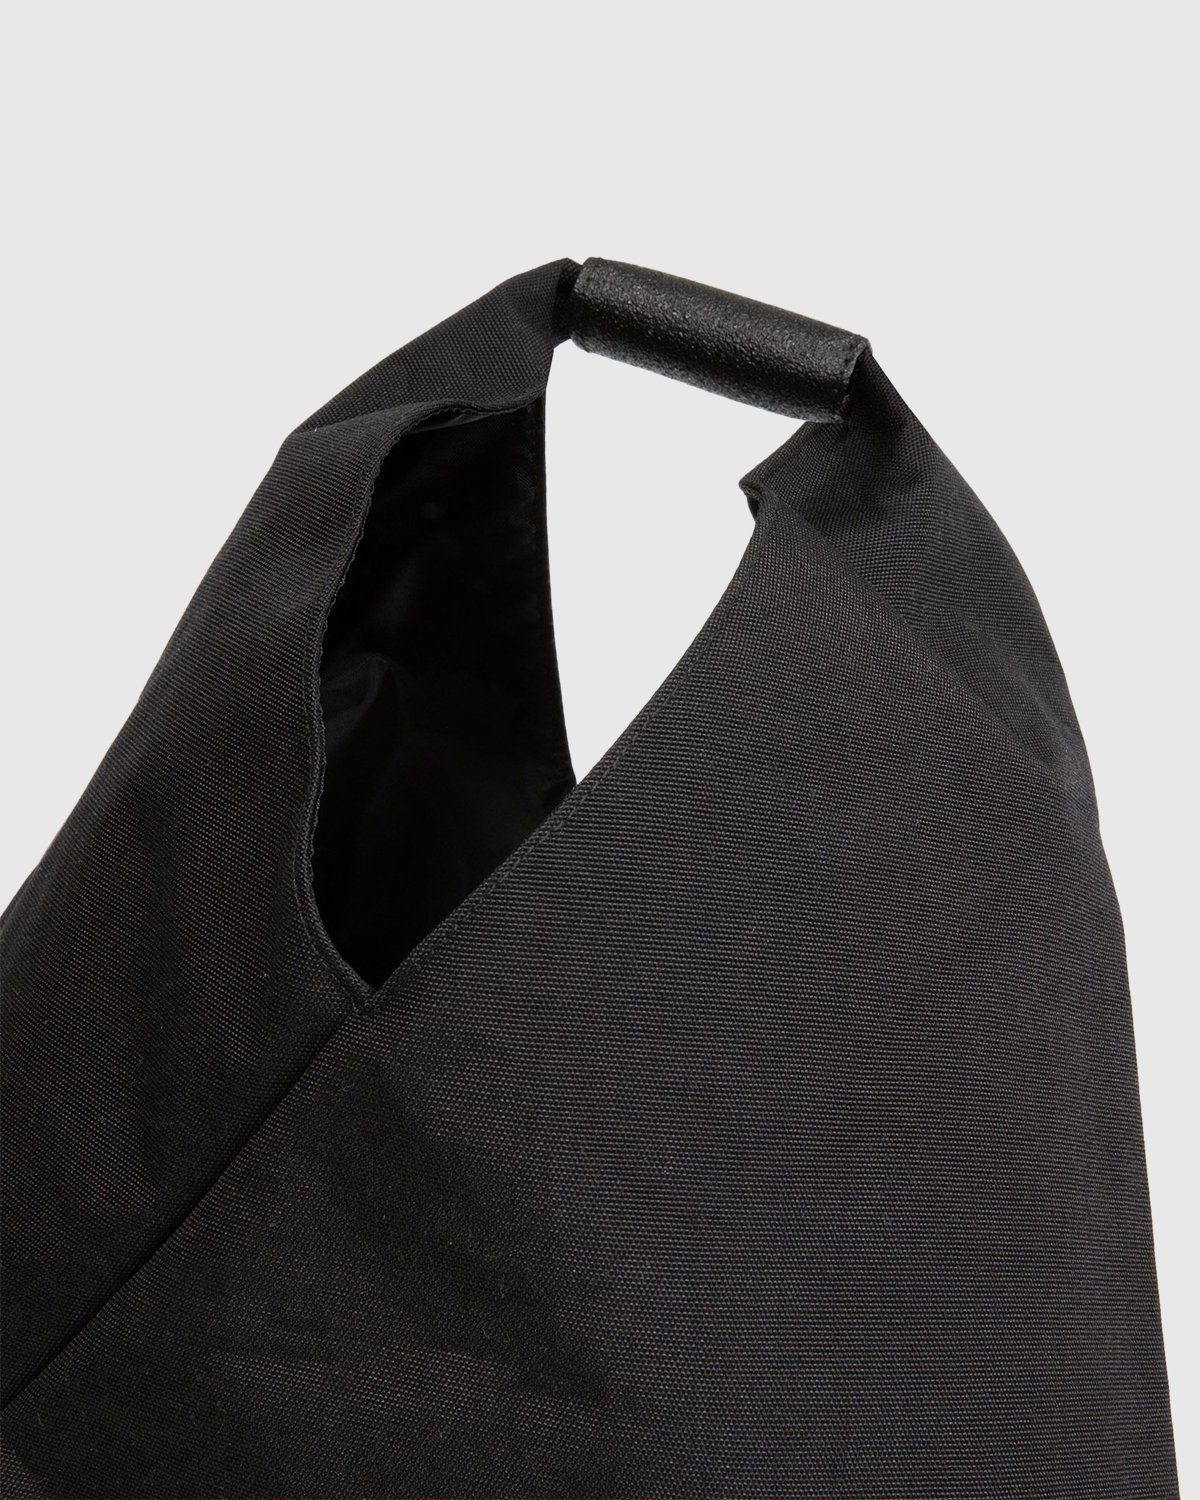 MM6 Maison Margiela x Eastpak – Shopping Bag Black - Tote Bags - Black - Image 3